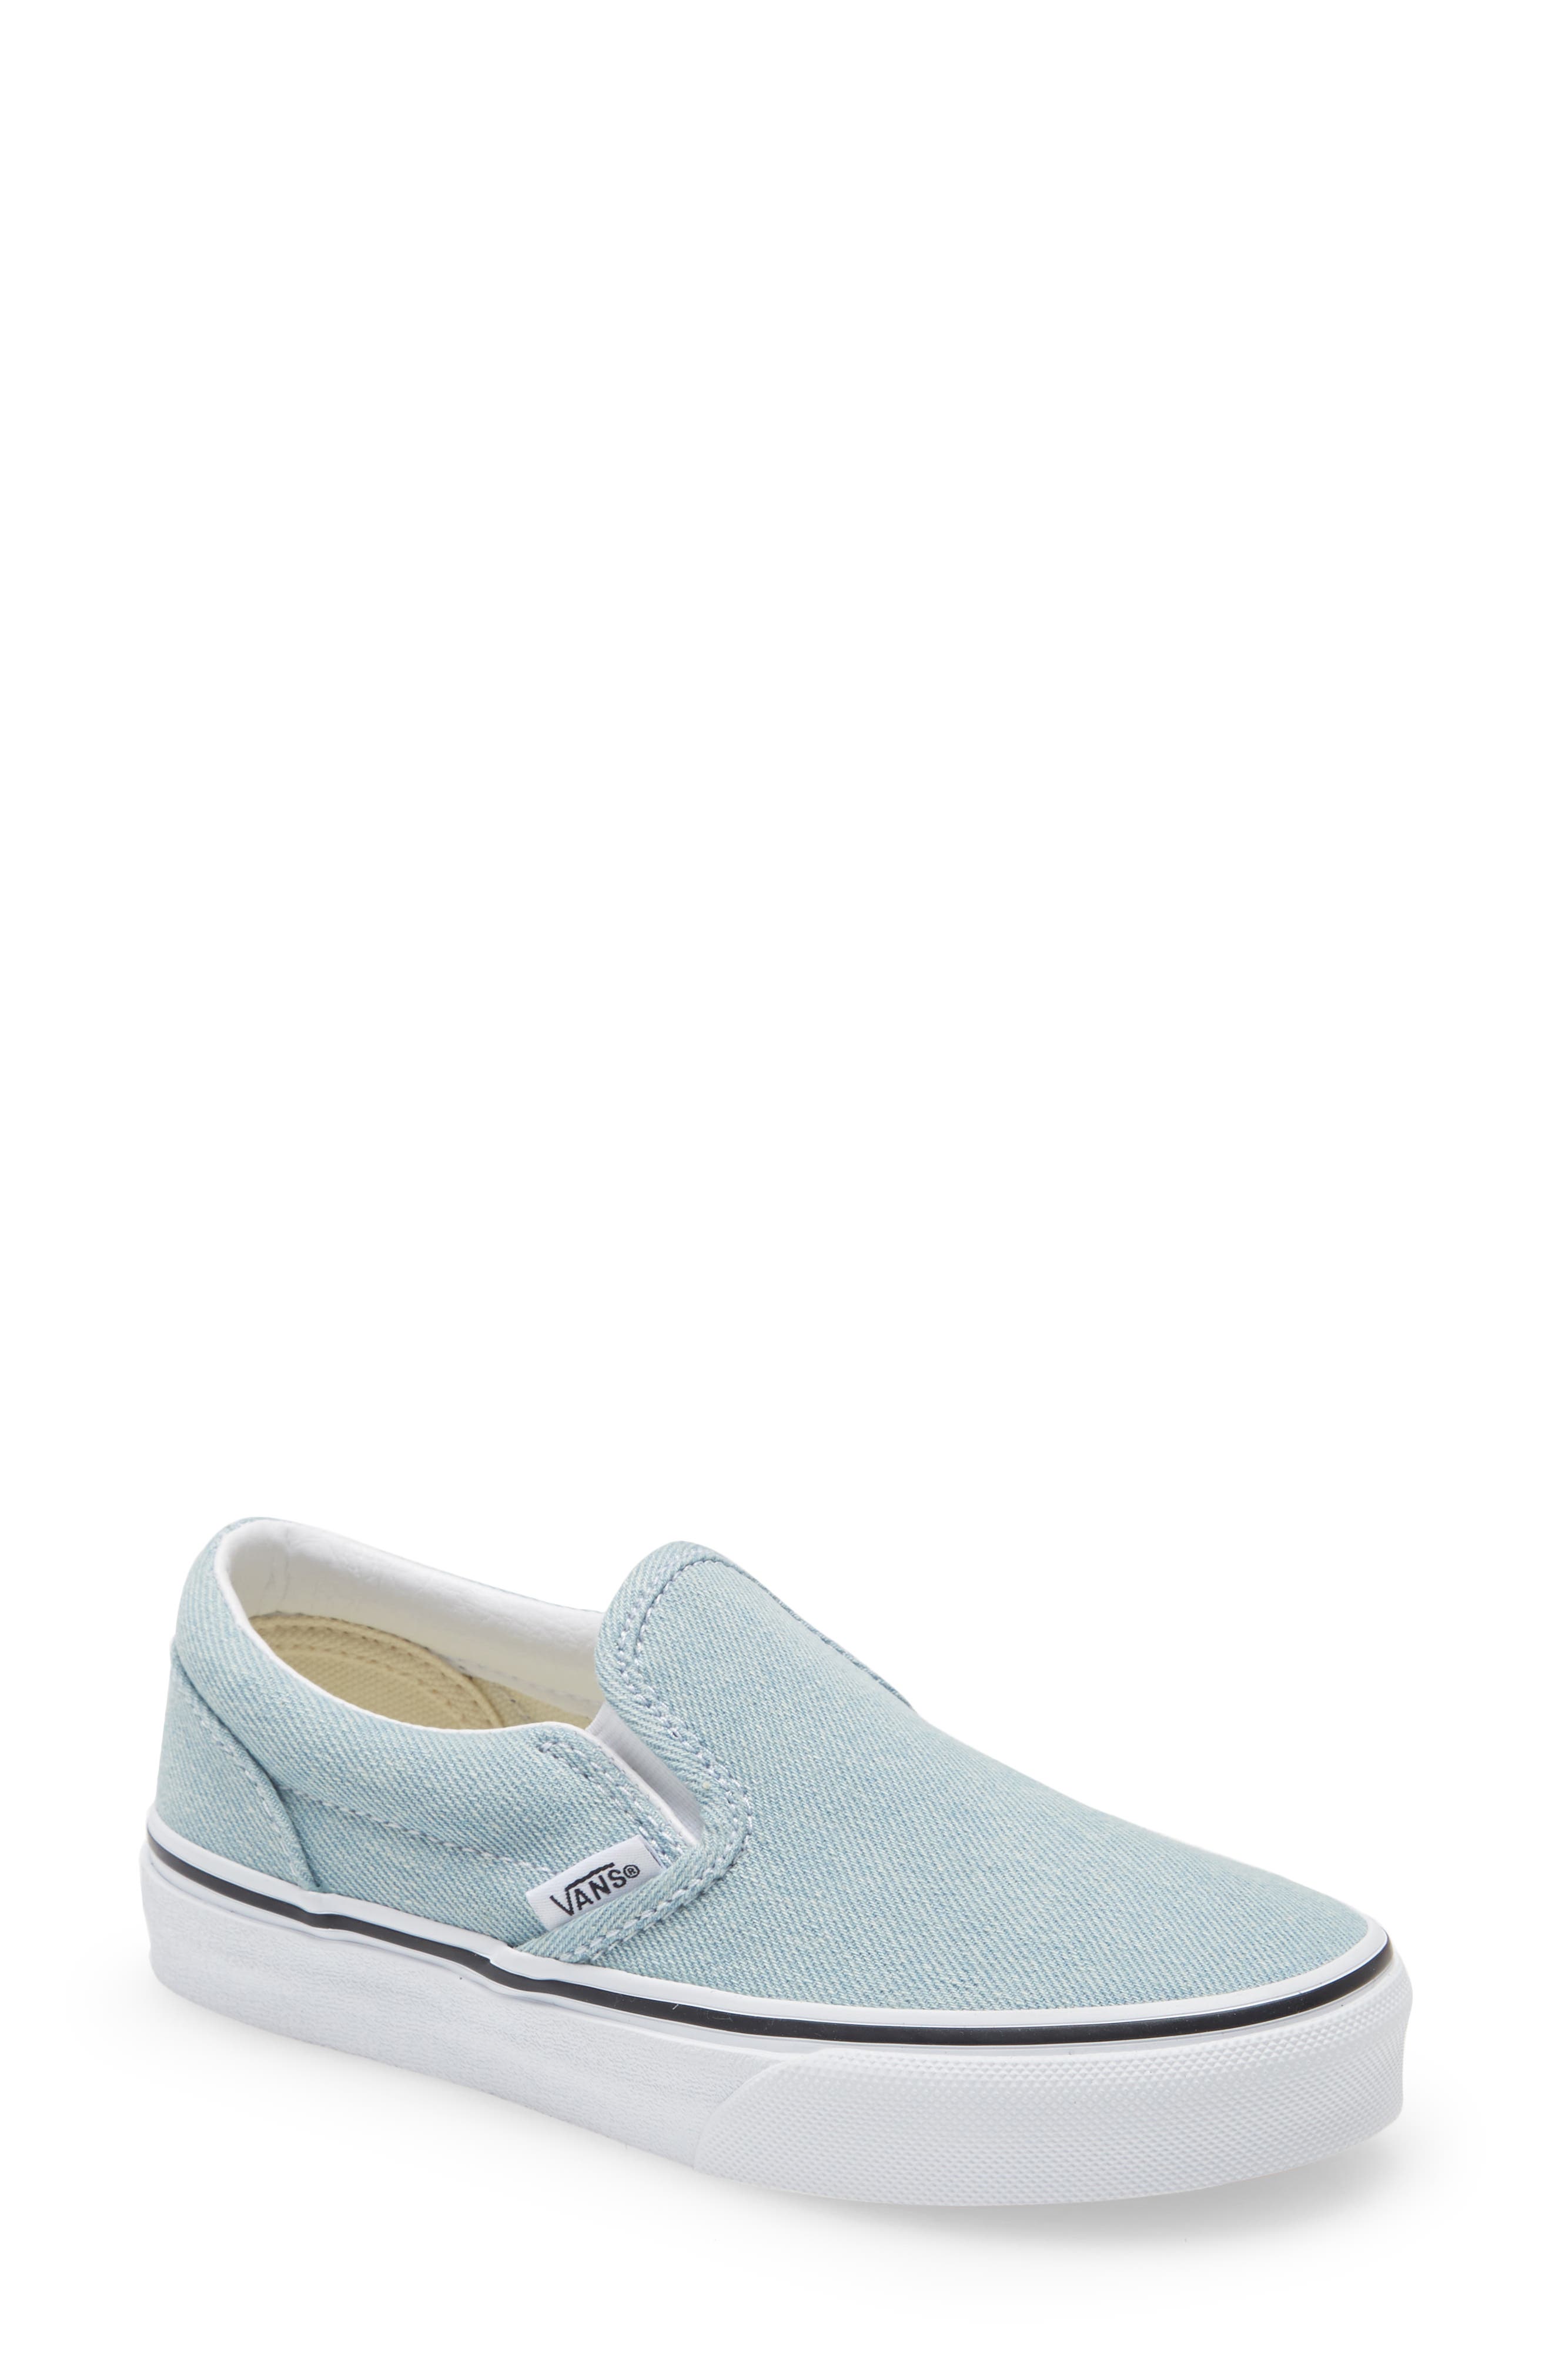 blue vans shoes for girls